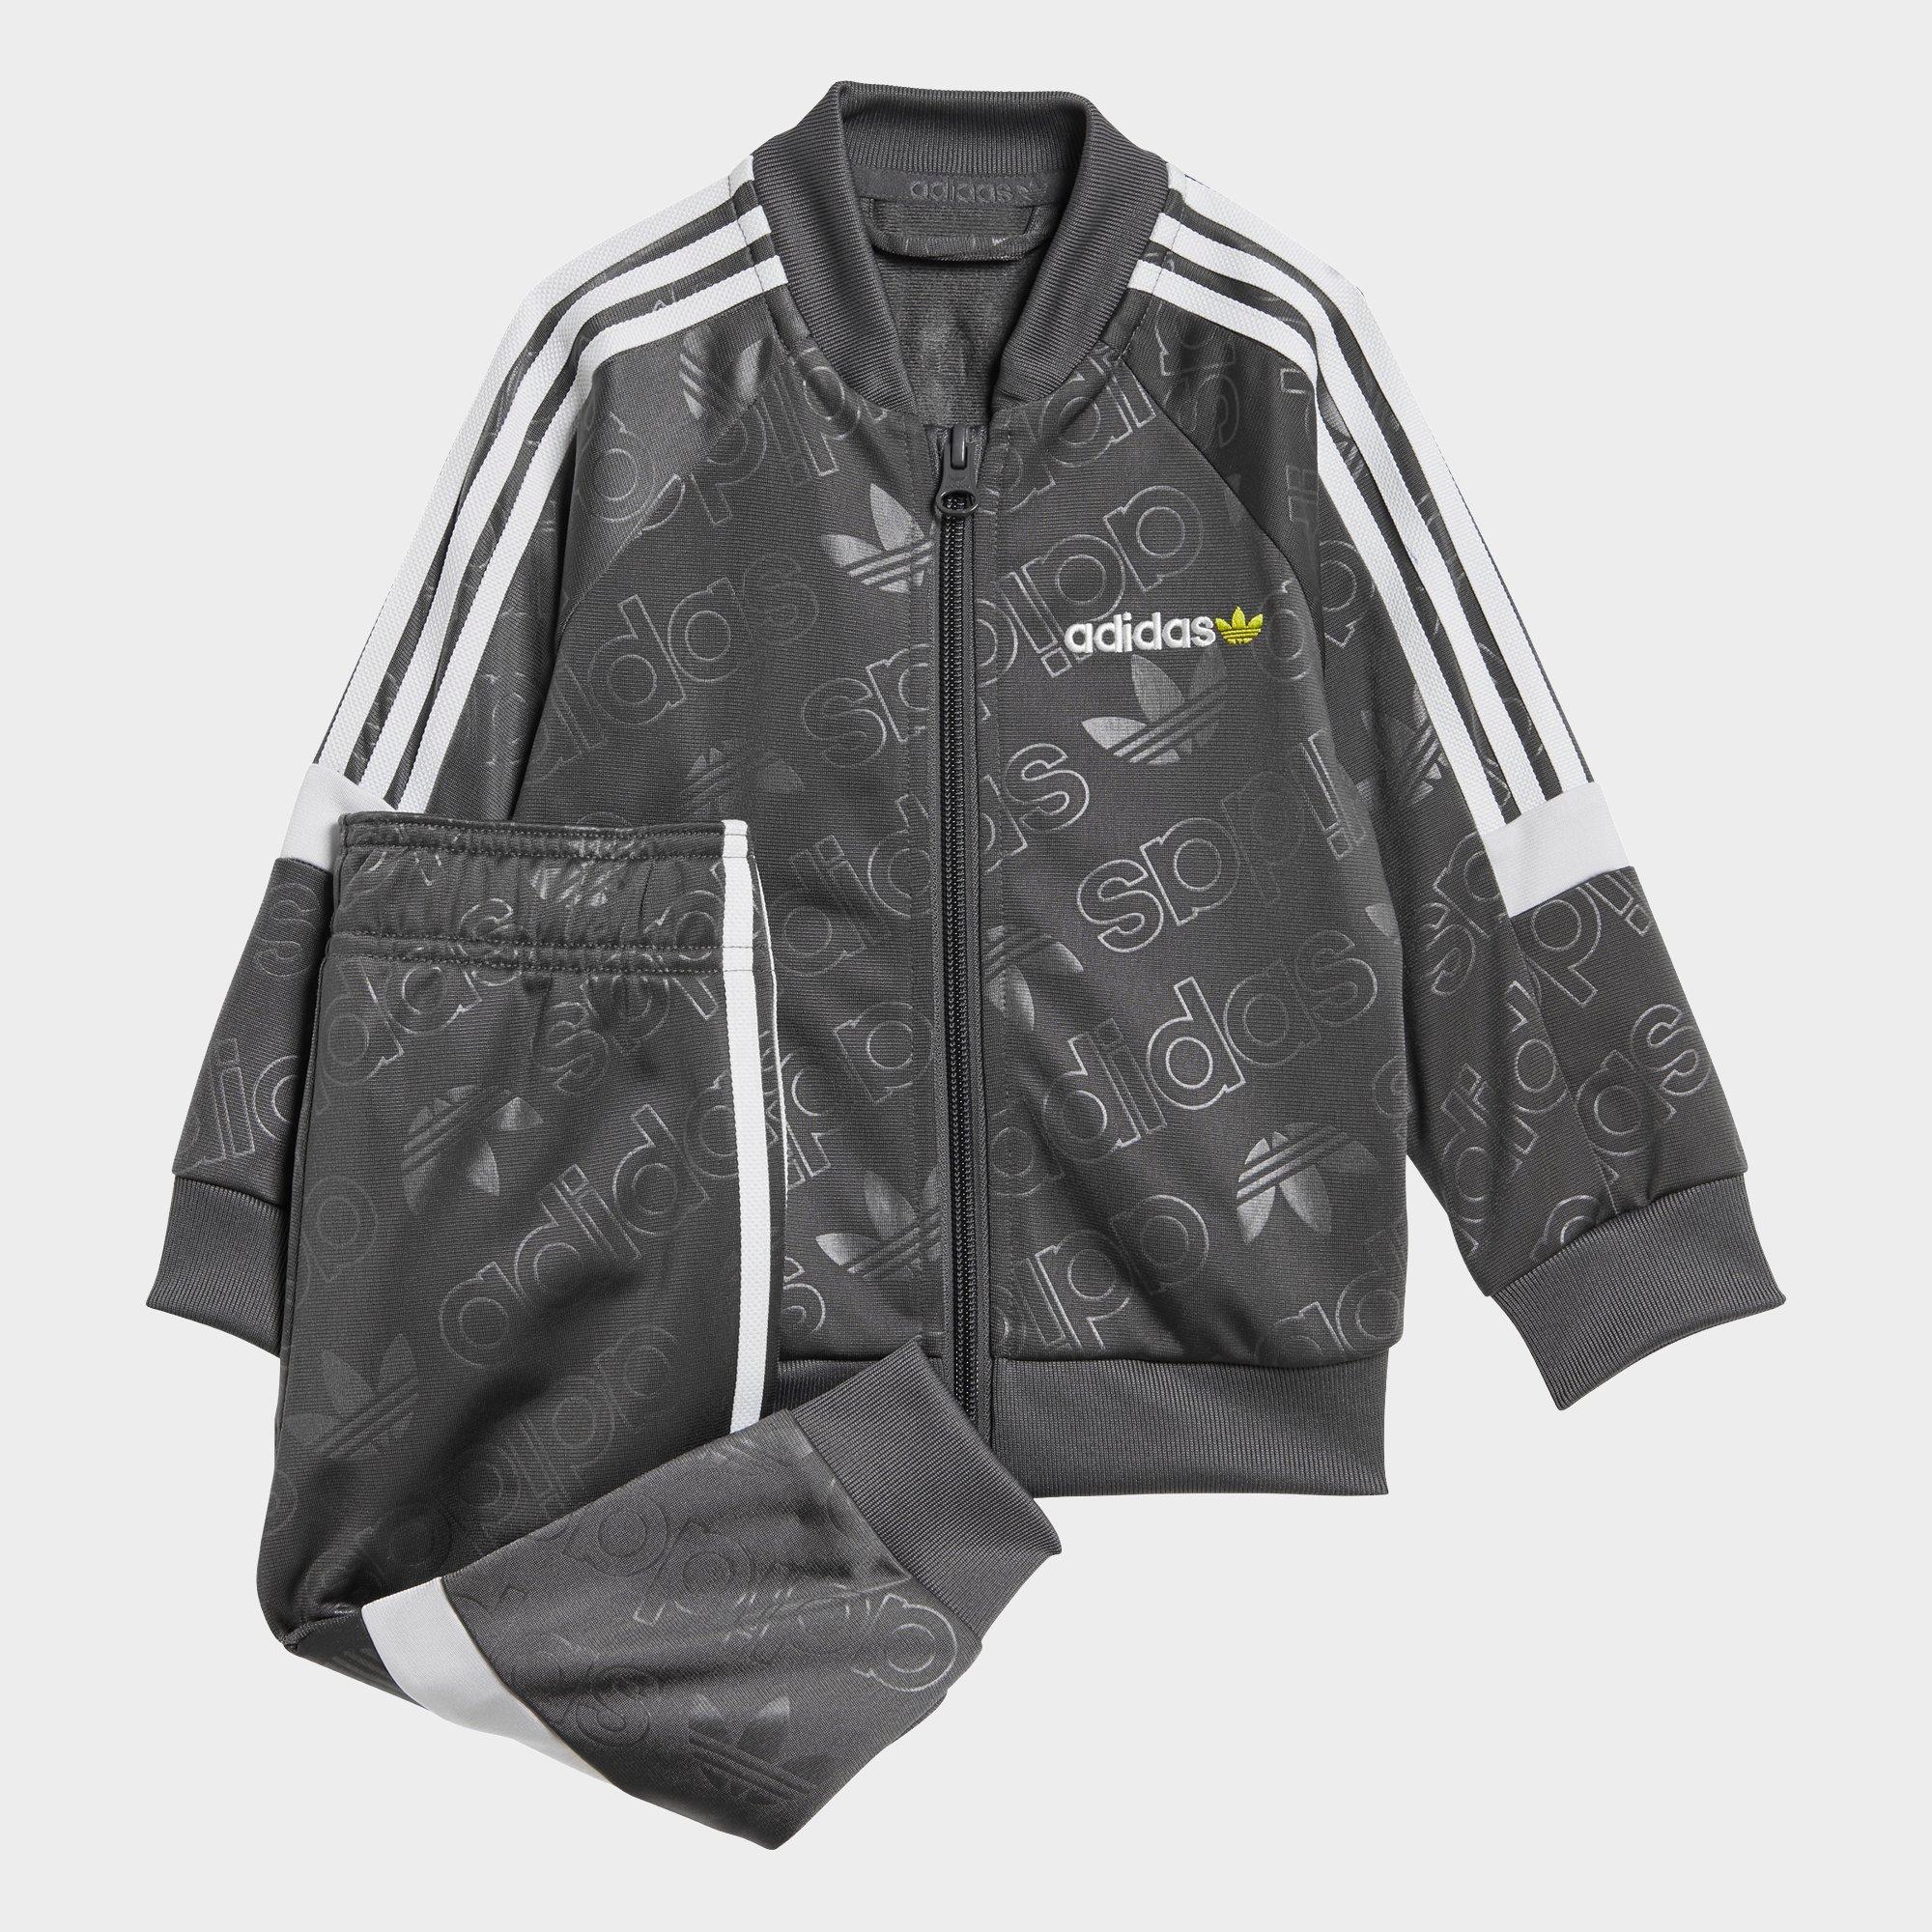 adidas superstar track jacket grey